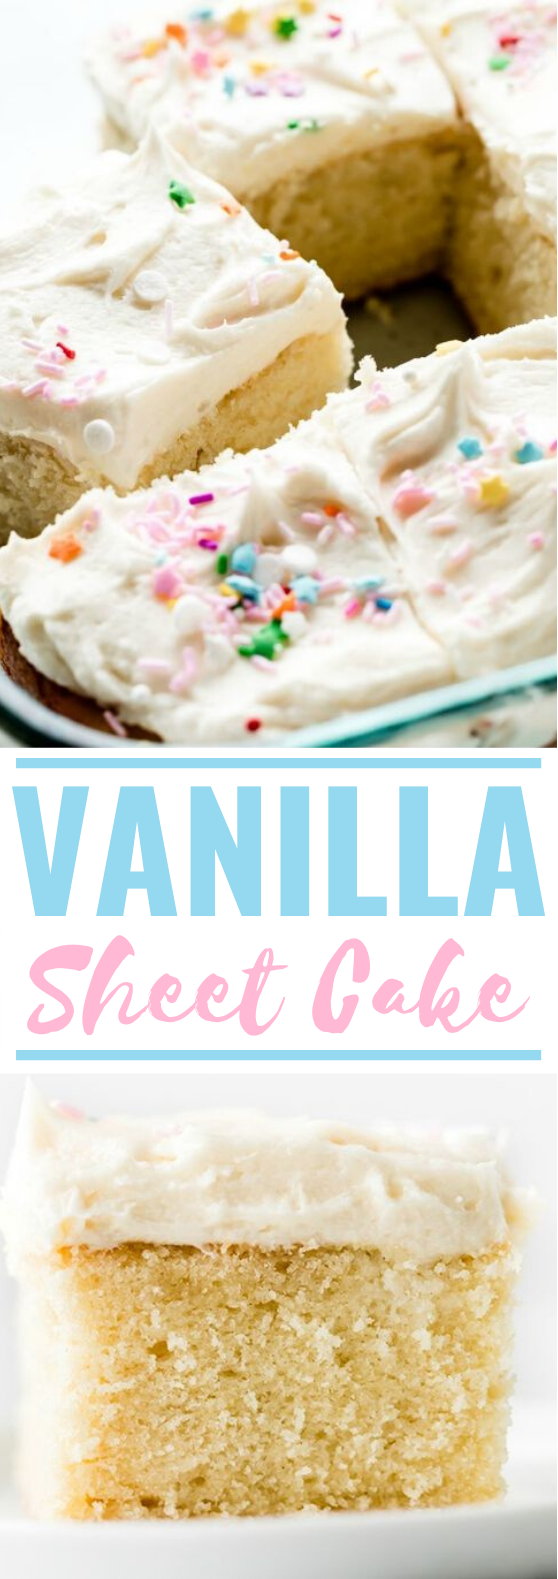 Vanilla Sheet Cake with Whipped Buttercream Frosting #cake #recipes #easy #birthday #baking